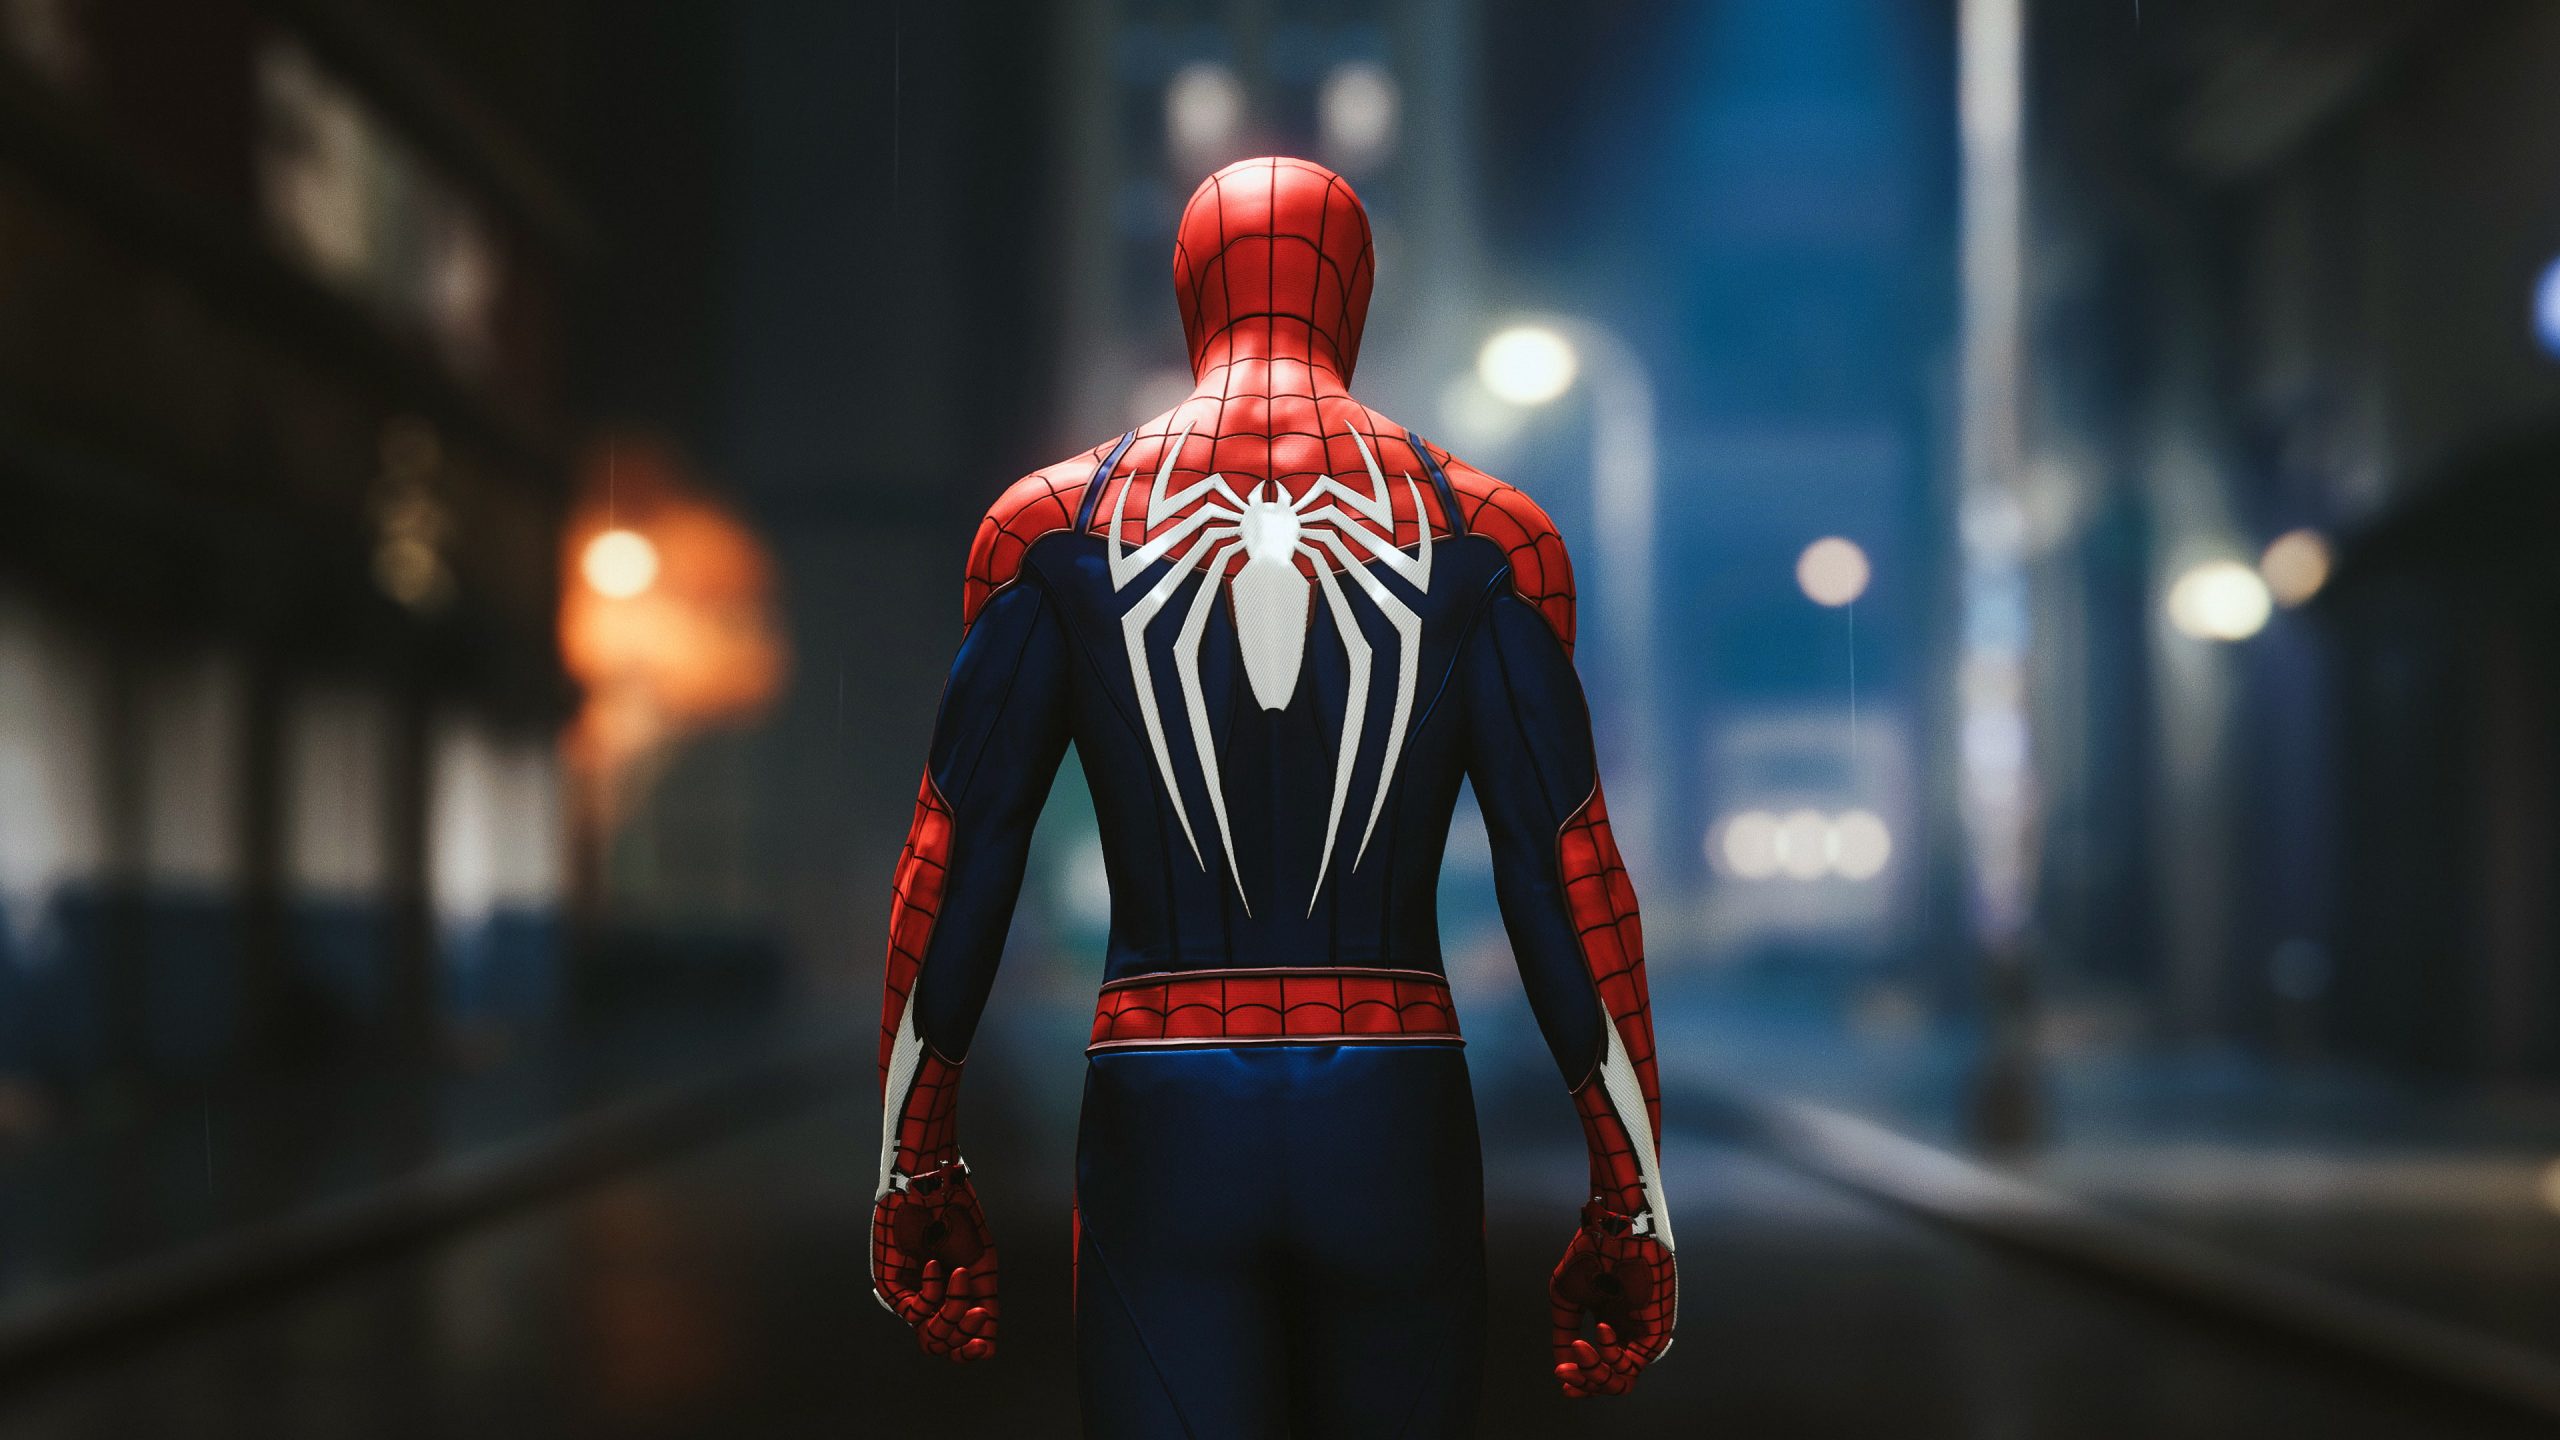 Spider-Man, video games, superhero, Marvel Comics, rear view